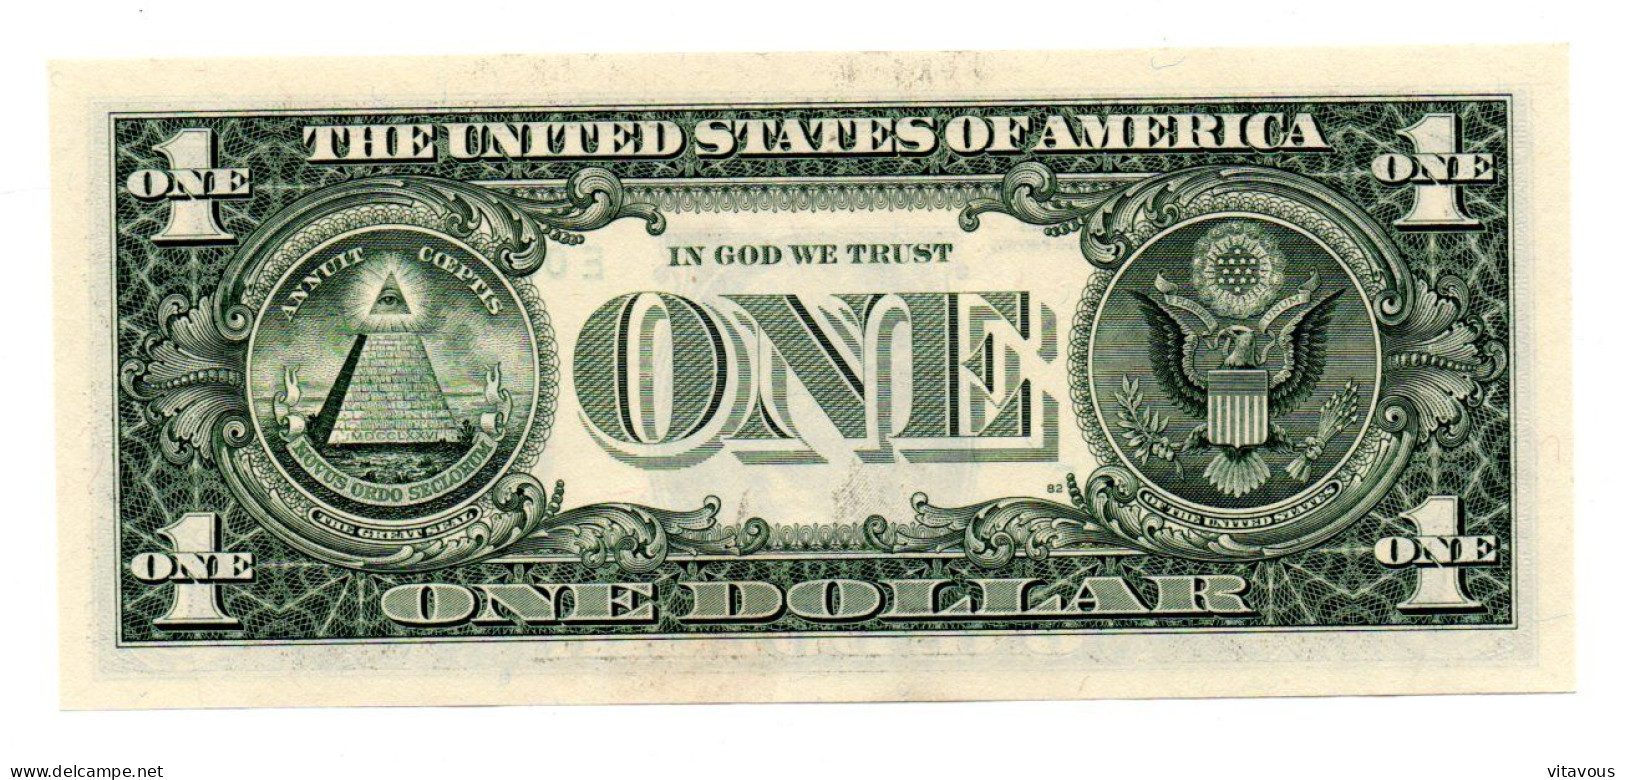 Billet USA  Washington D.C. Série 2003 - 1 Dollar  N° E 03633818 F - Bank-note Banknote - Federal Reserve Notes (1928-...)